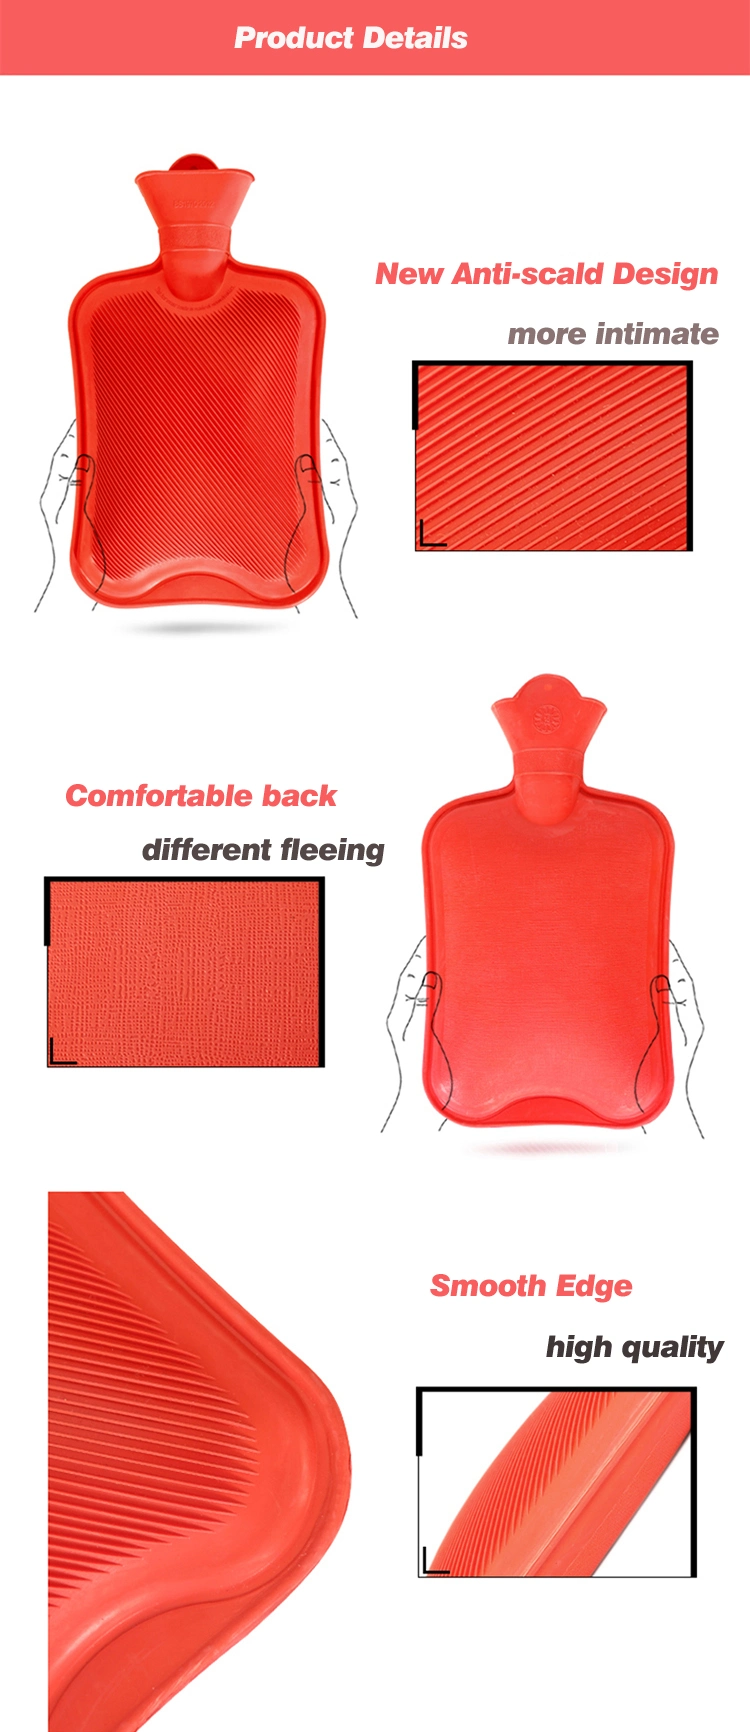 Custom Hand Warmer Waterproof Fur Cover Rubber Bottle Hot Water Bag